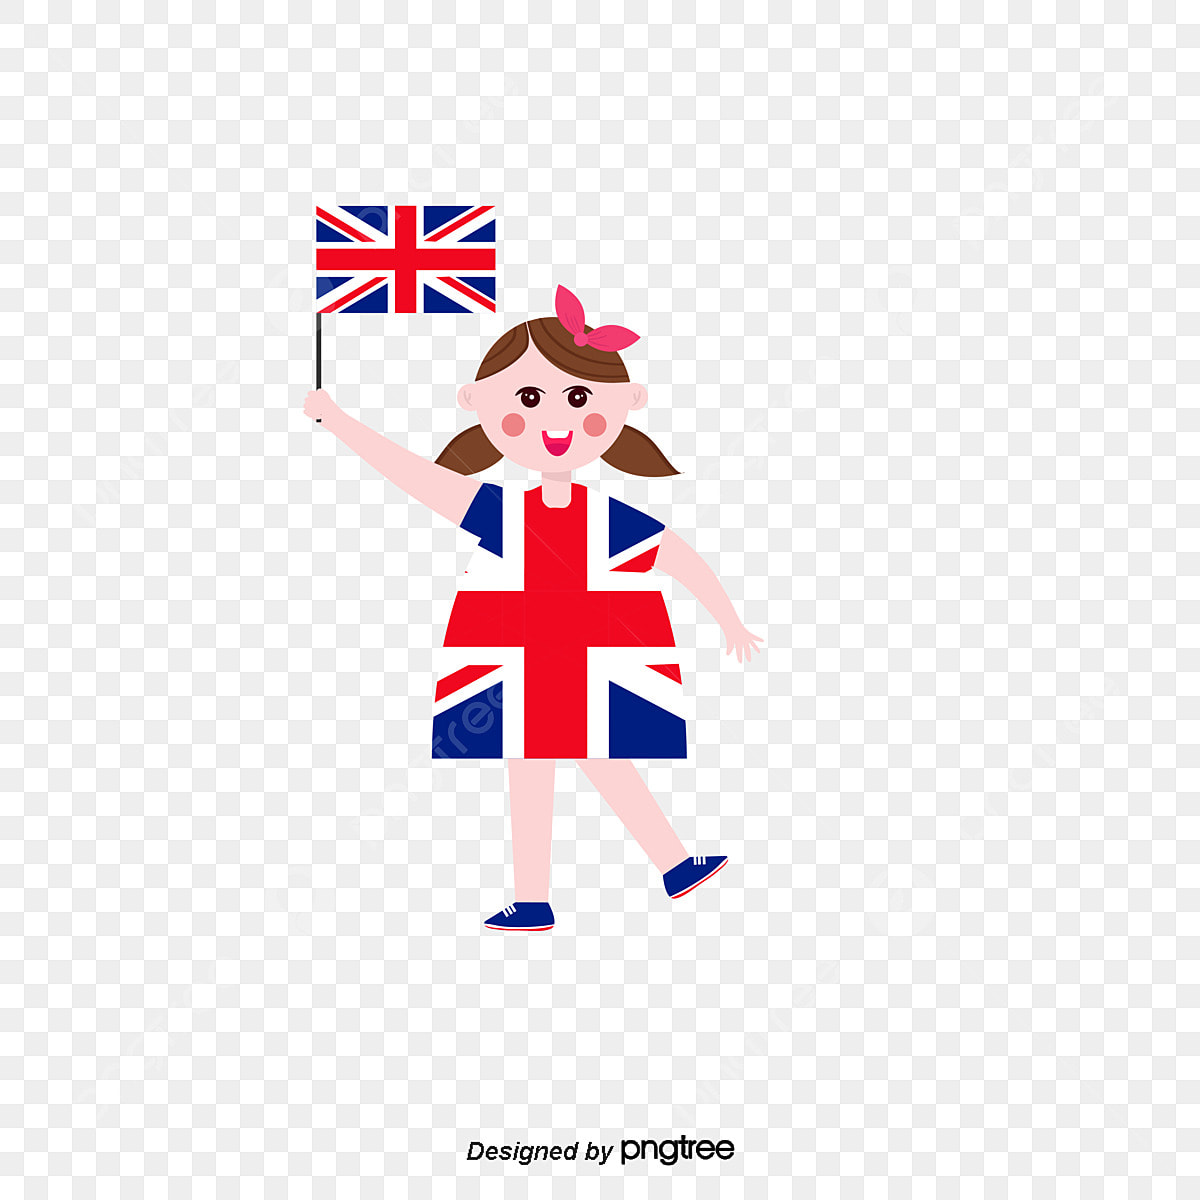 pngtree-red-white-blue-flat-wind-british-flag-children-png-image_3847861.jpg